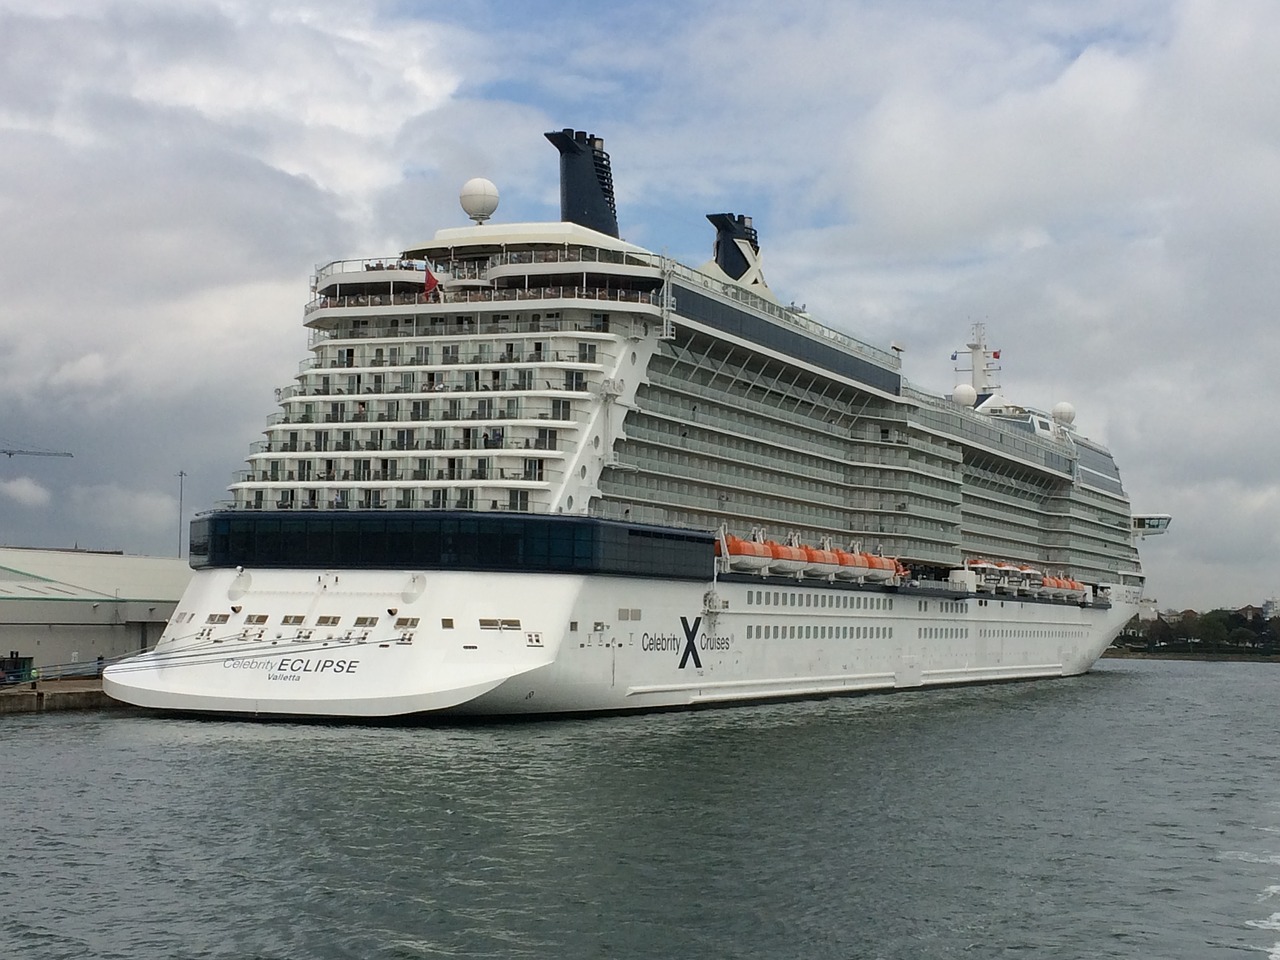 celebrity eclipse cruise liner passenger ship free photo